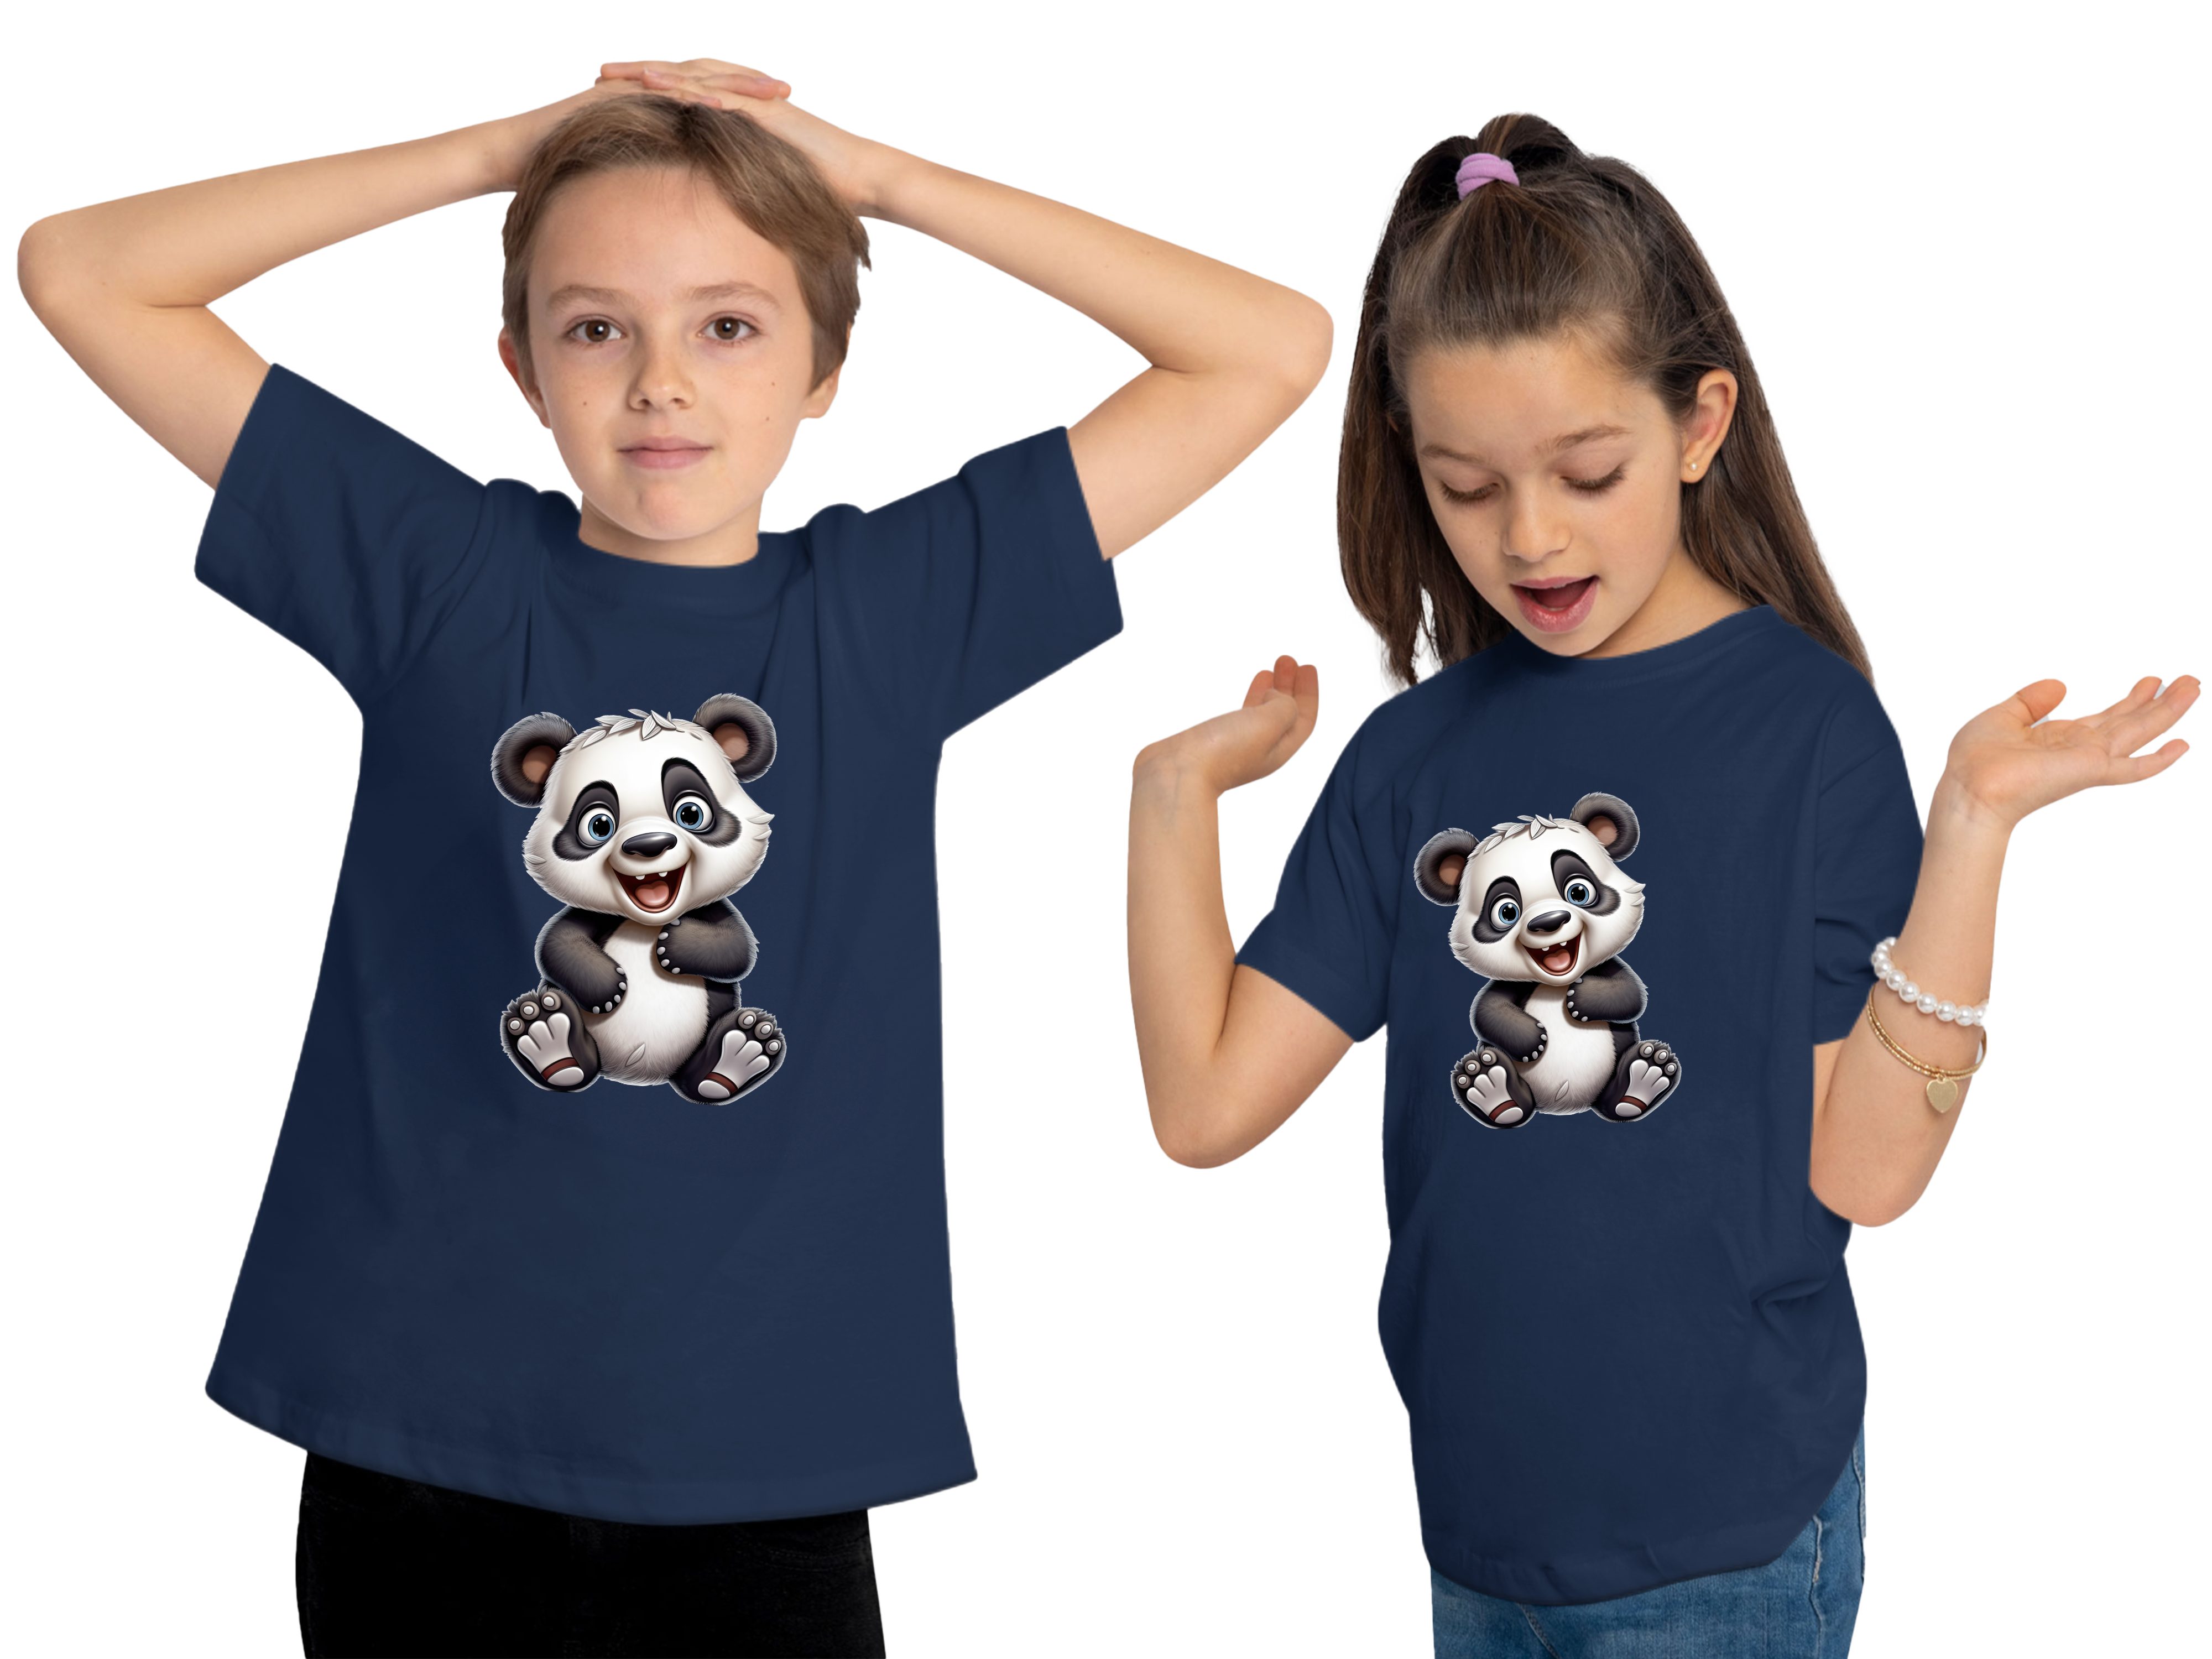 MyDesign24 T-Shirt Kinder Shirt Panda - Aufdruck, blau mit bedruckt navy Baby Bär Wildtier i277 Baumwollshirt Print